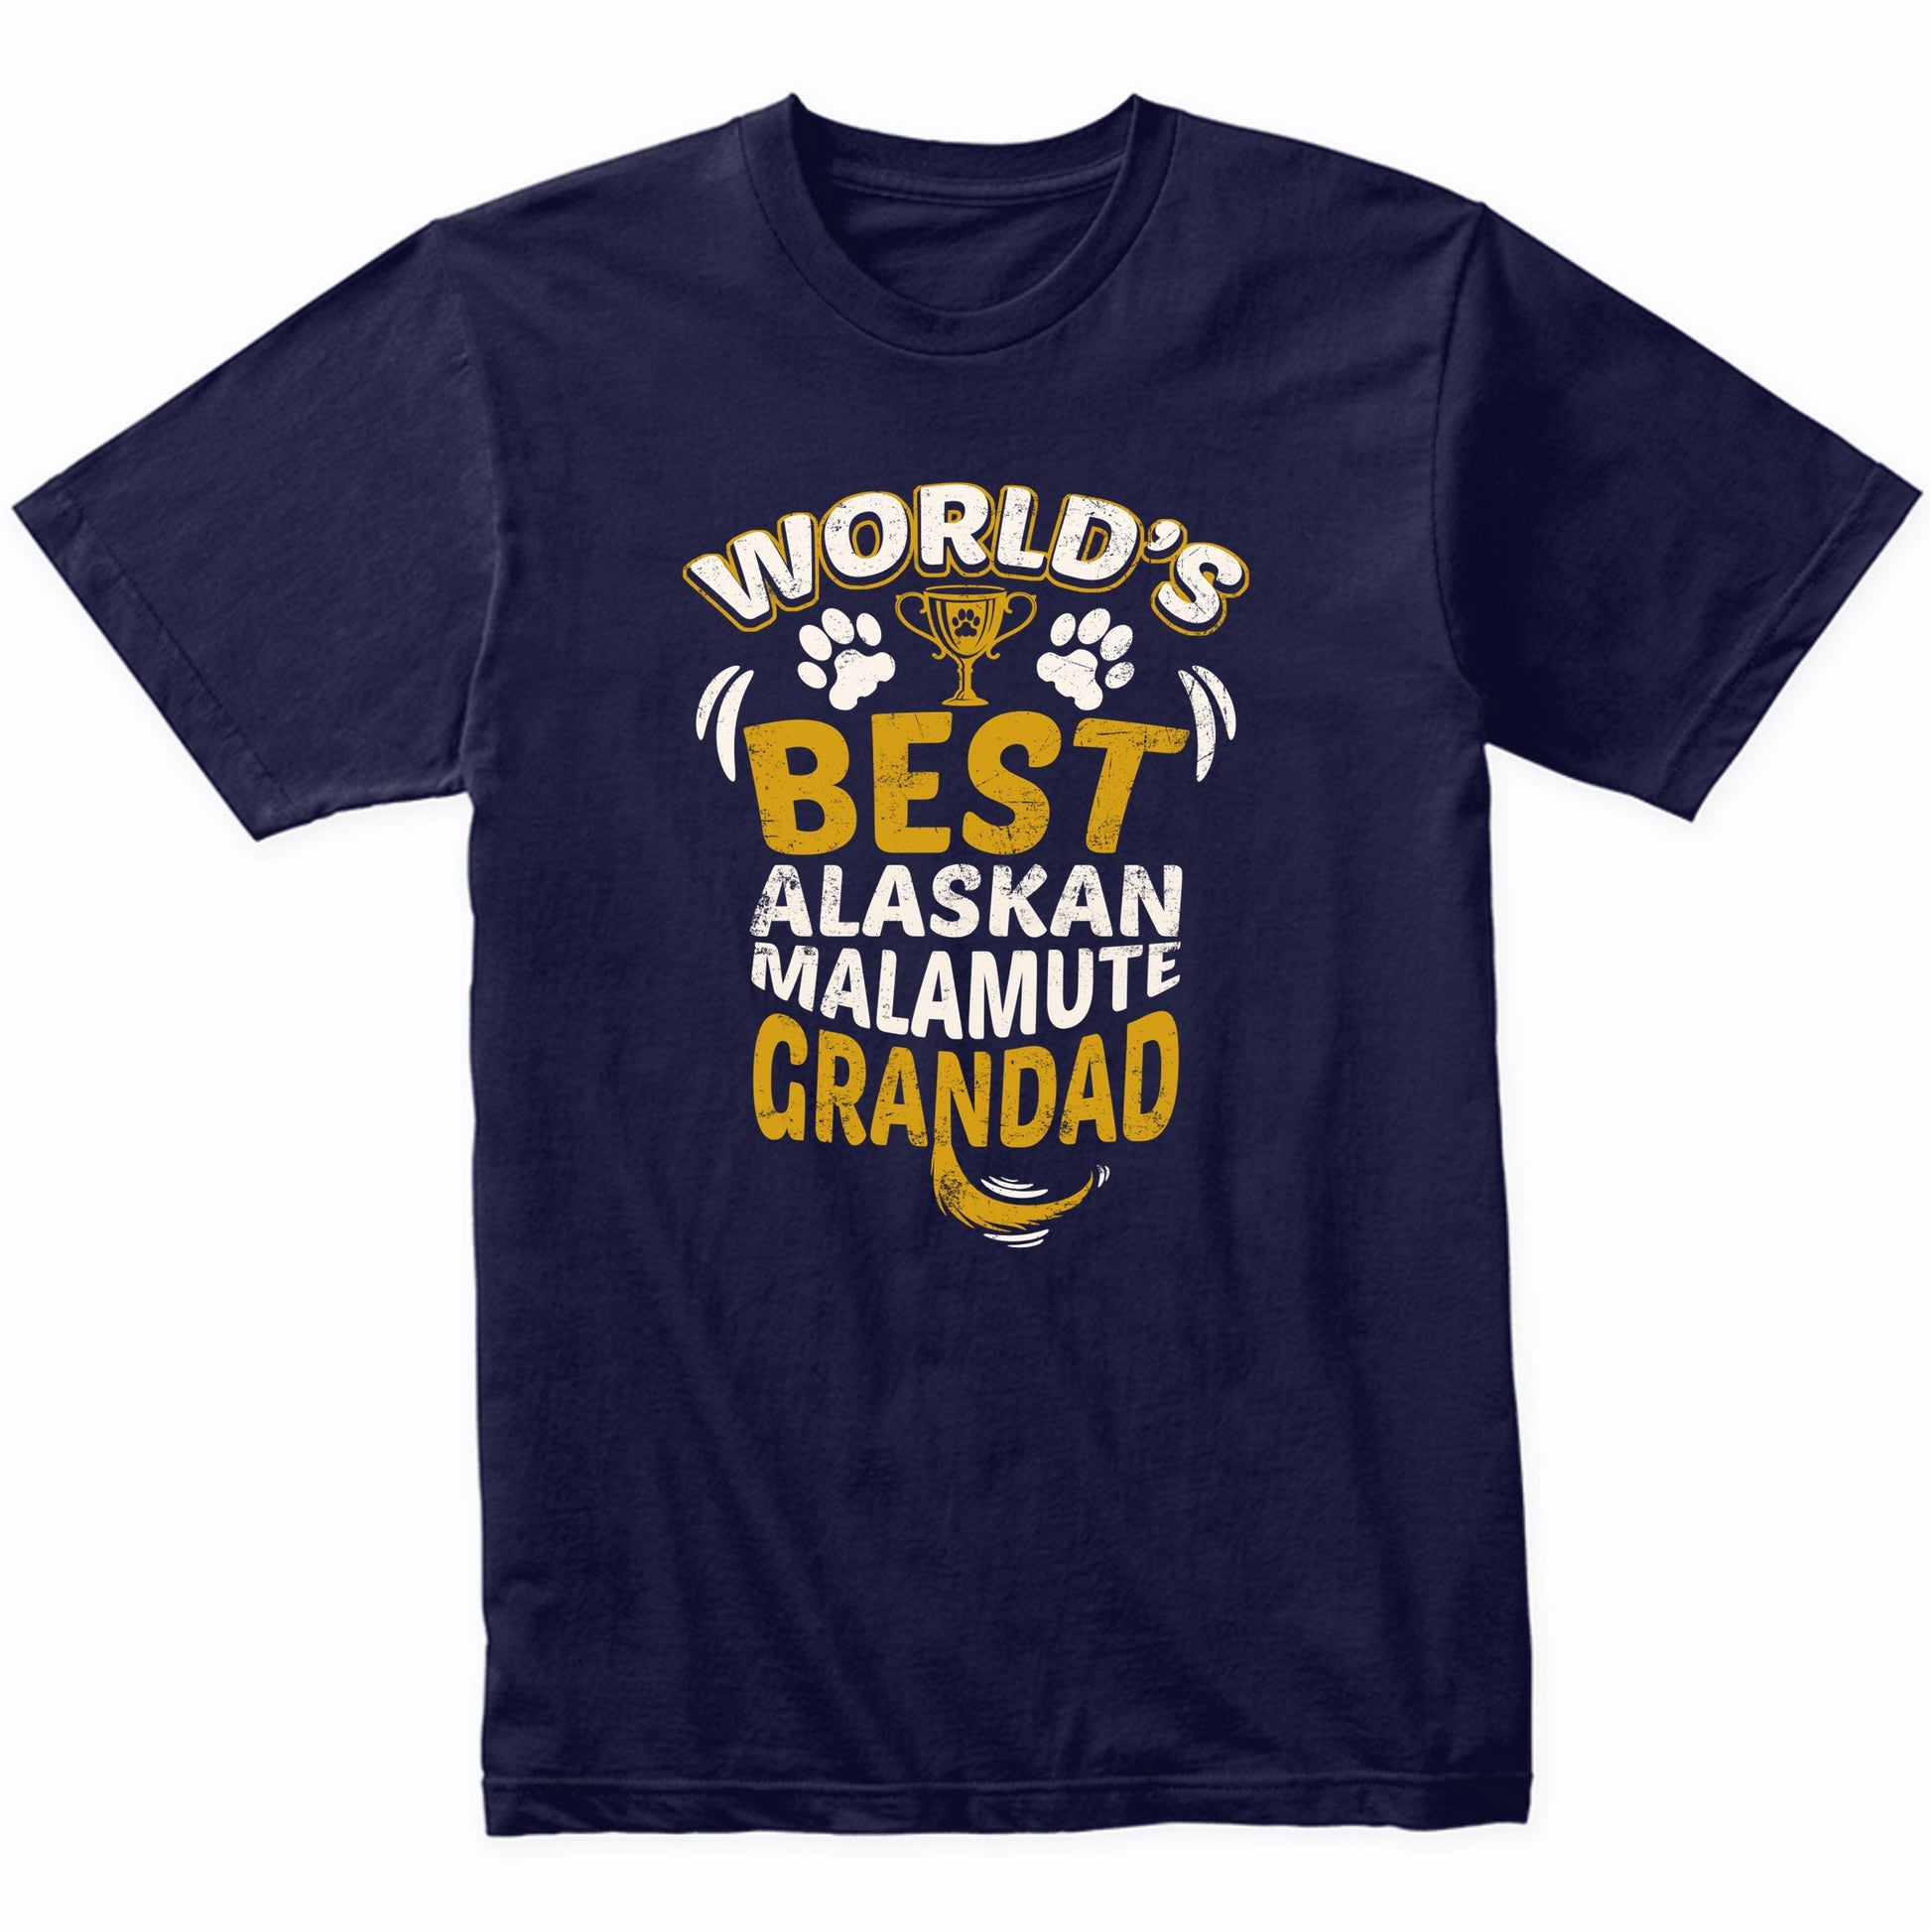 World's Best Alaskan Malamute Grandad Graphic T-Shirt